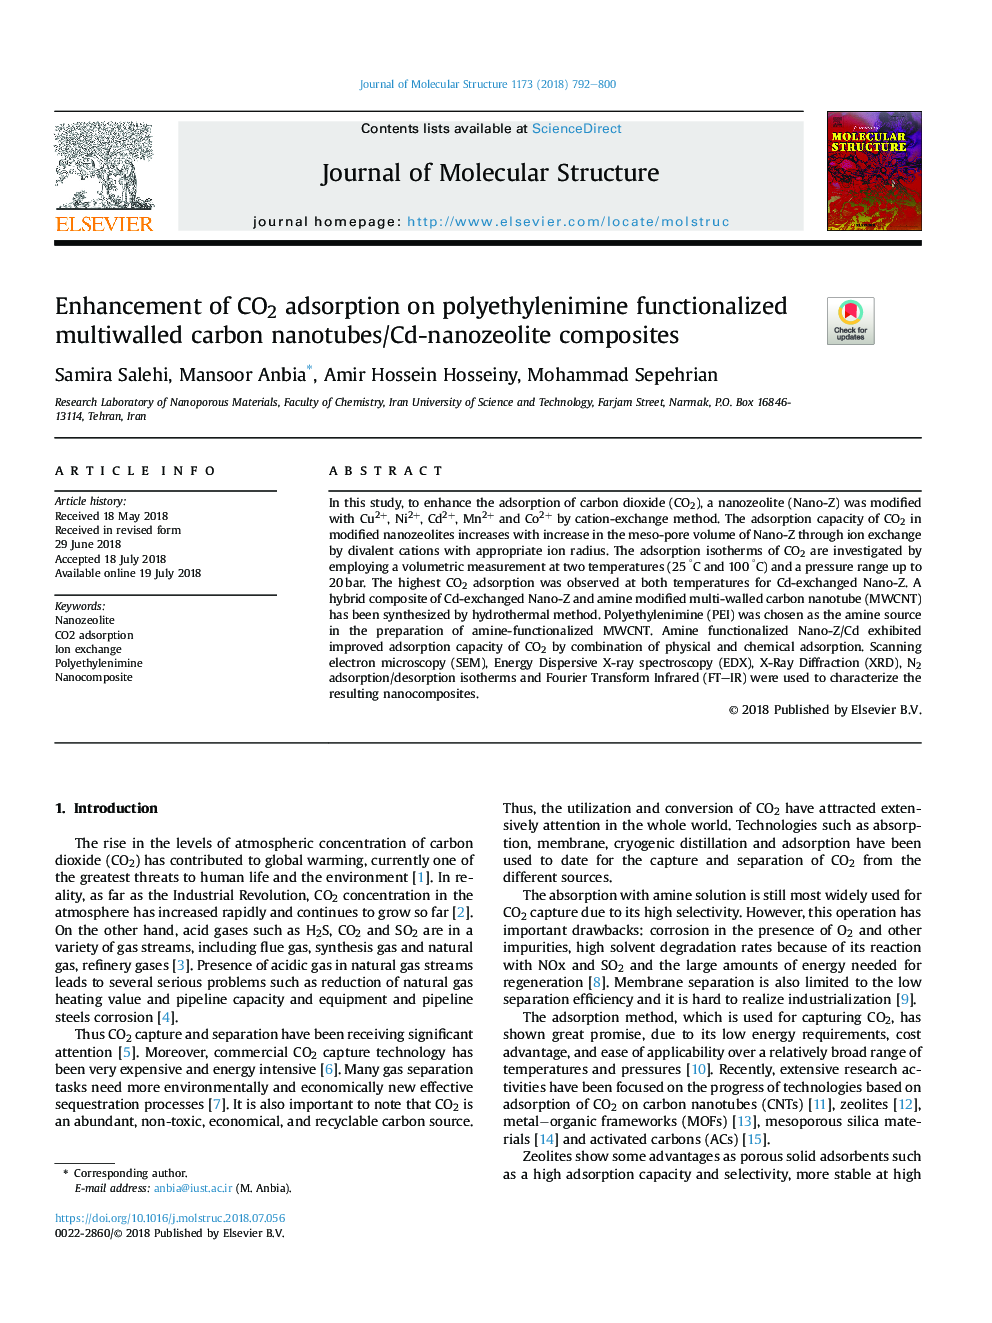 Enhancement of CO2 adsorption on polyethylenimine functionalized multiwalled carbon nanotubes/Cd-nanozeolite composites